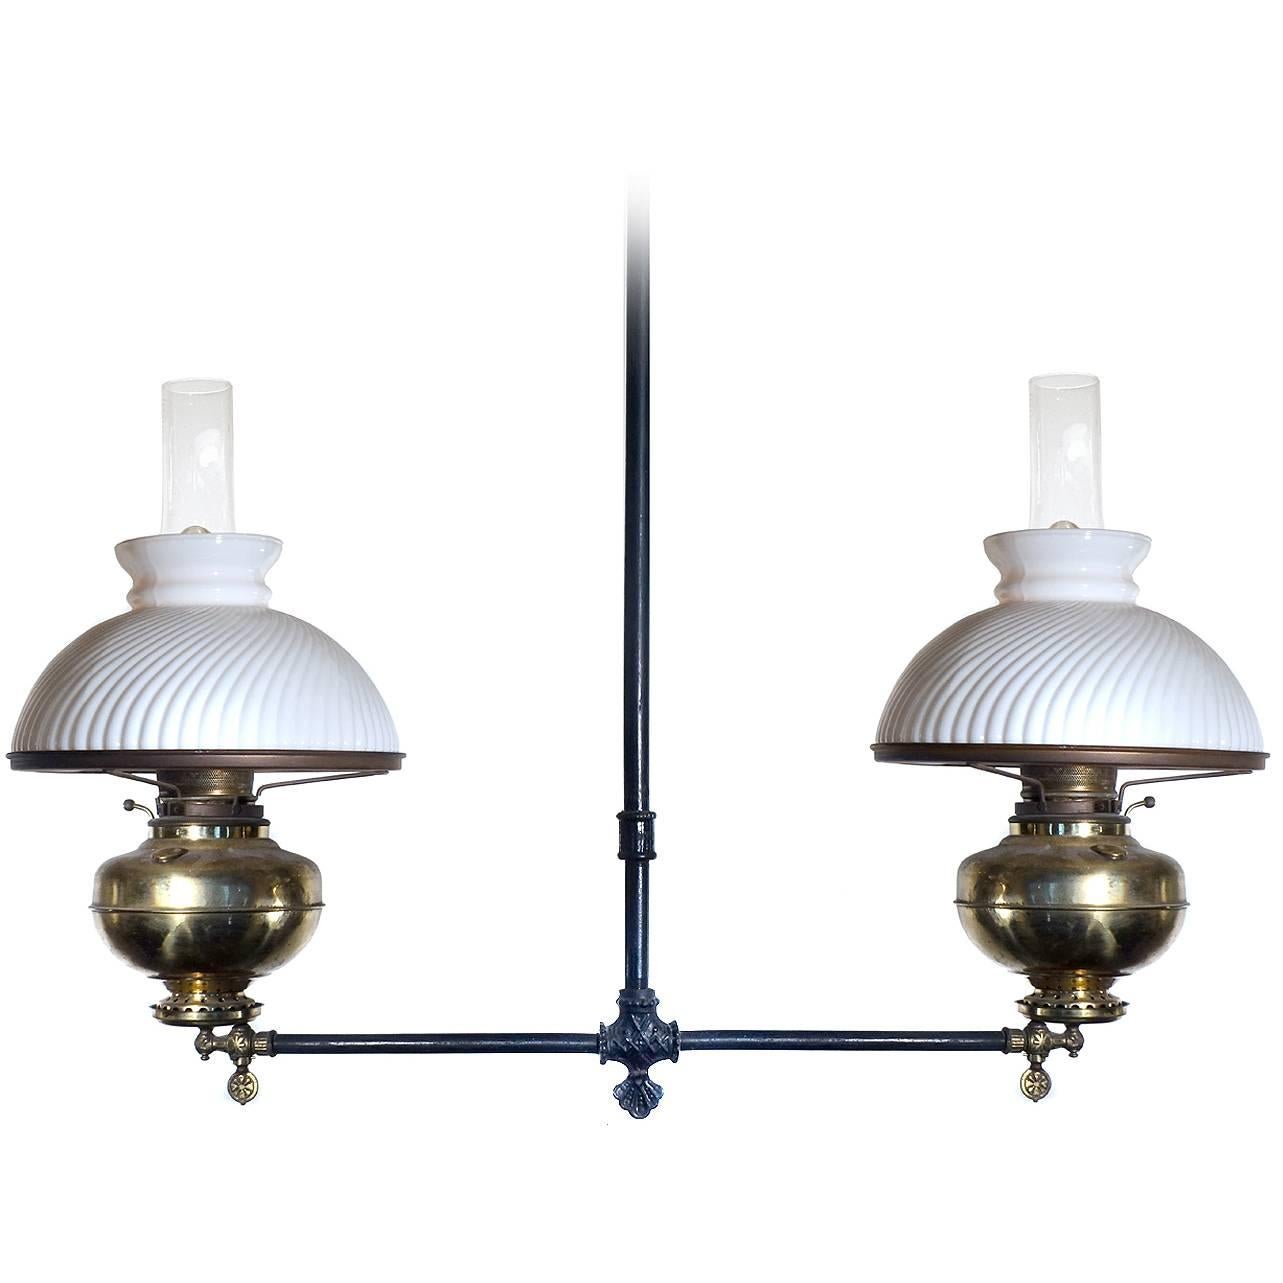 Original Double Gas Lamp